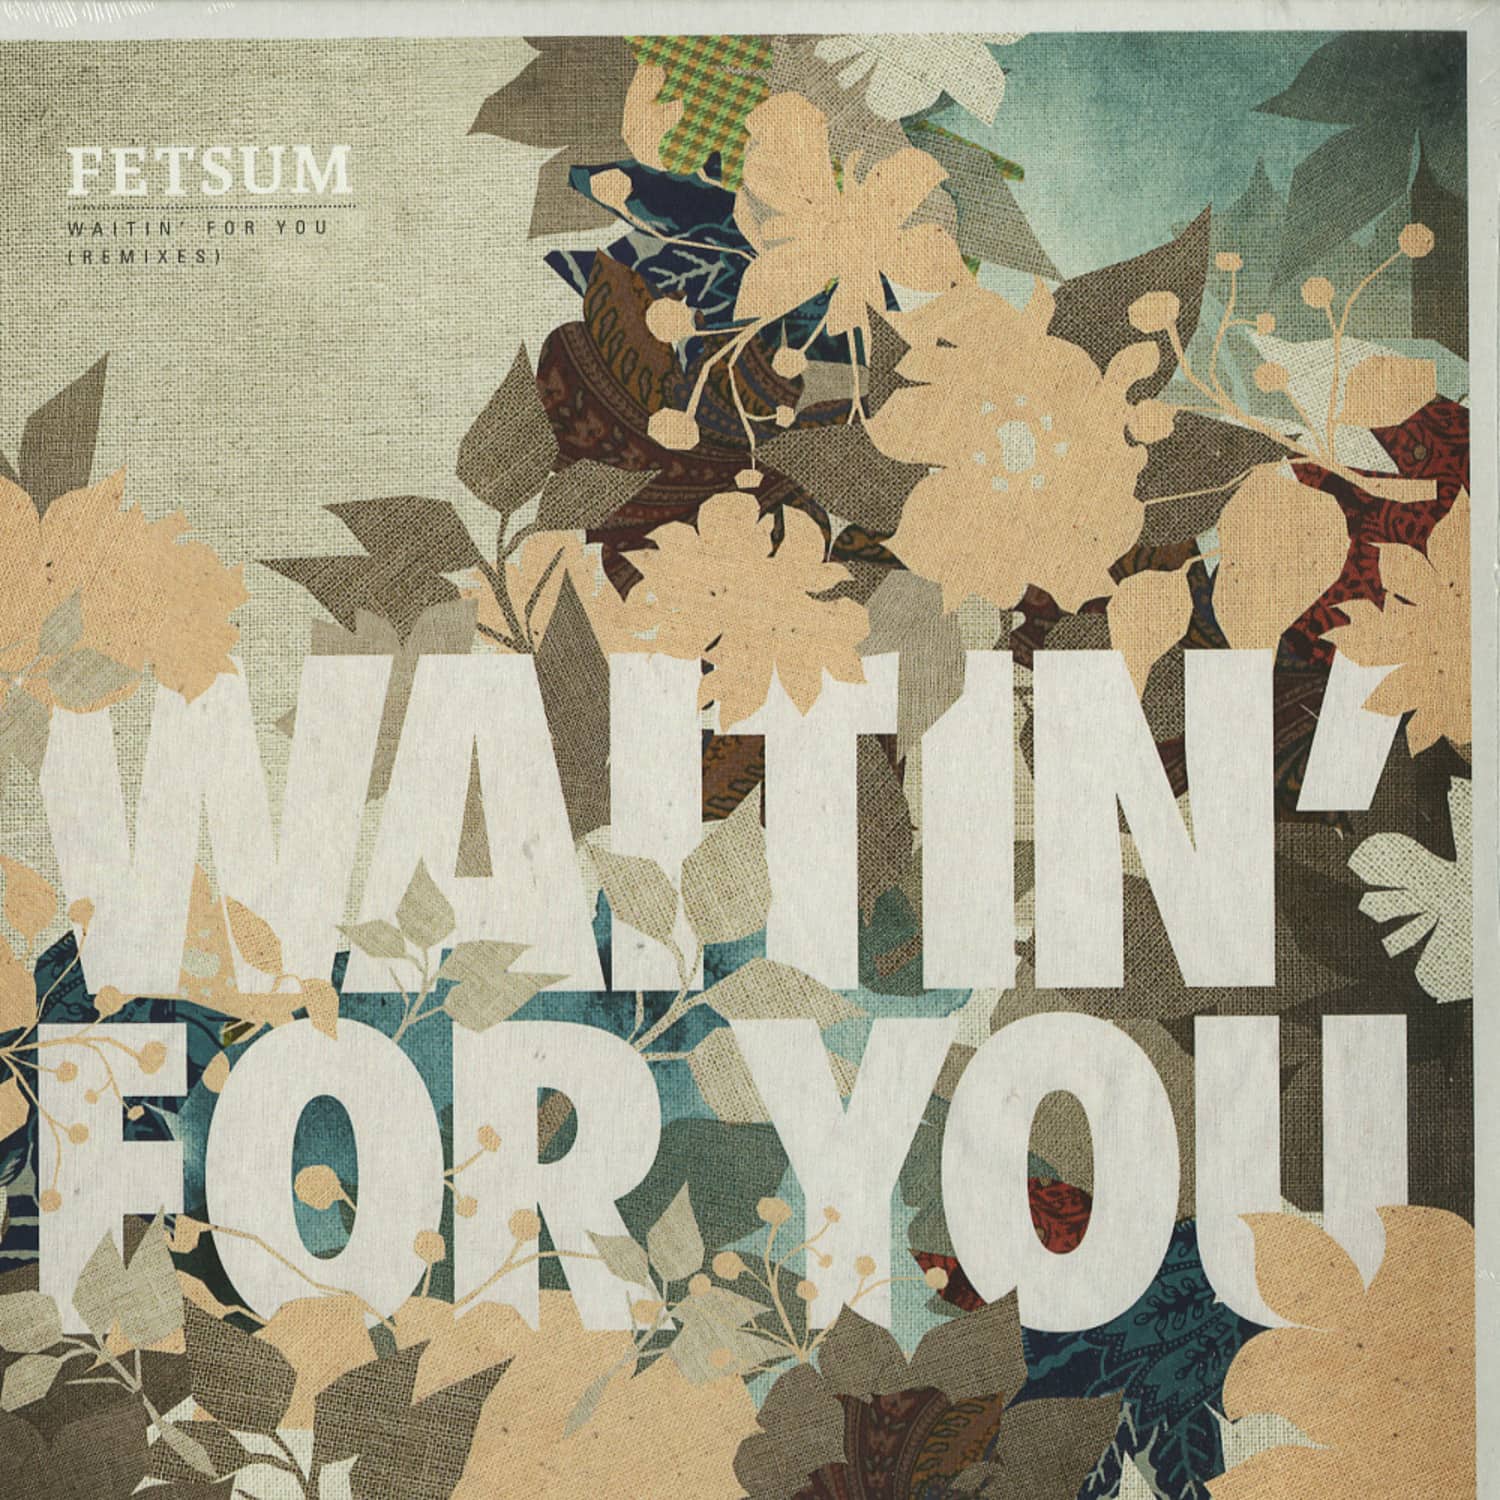 Fetsum - WAITIN FOR YOU 